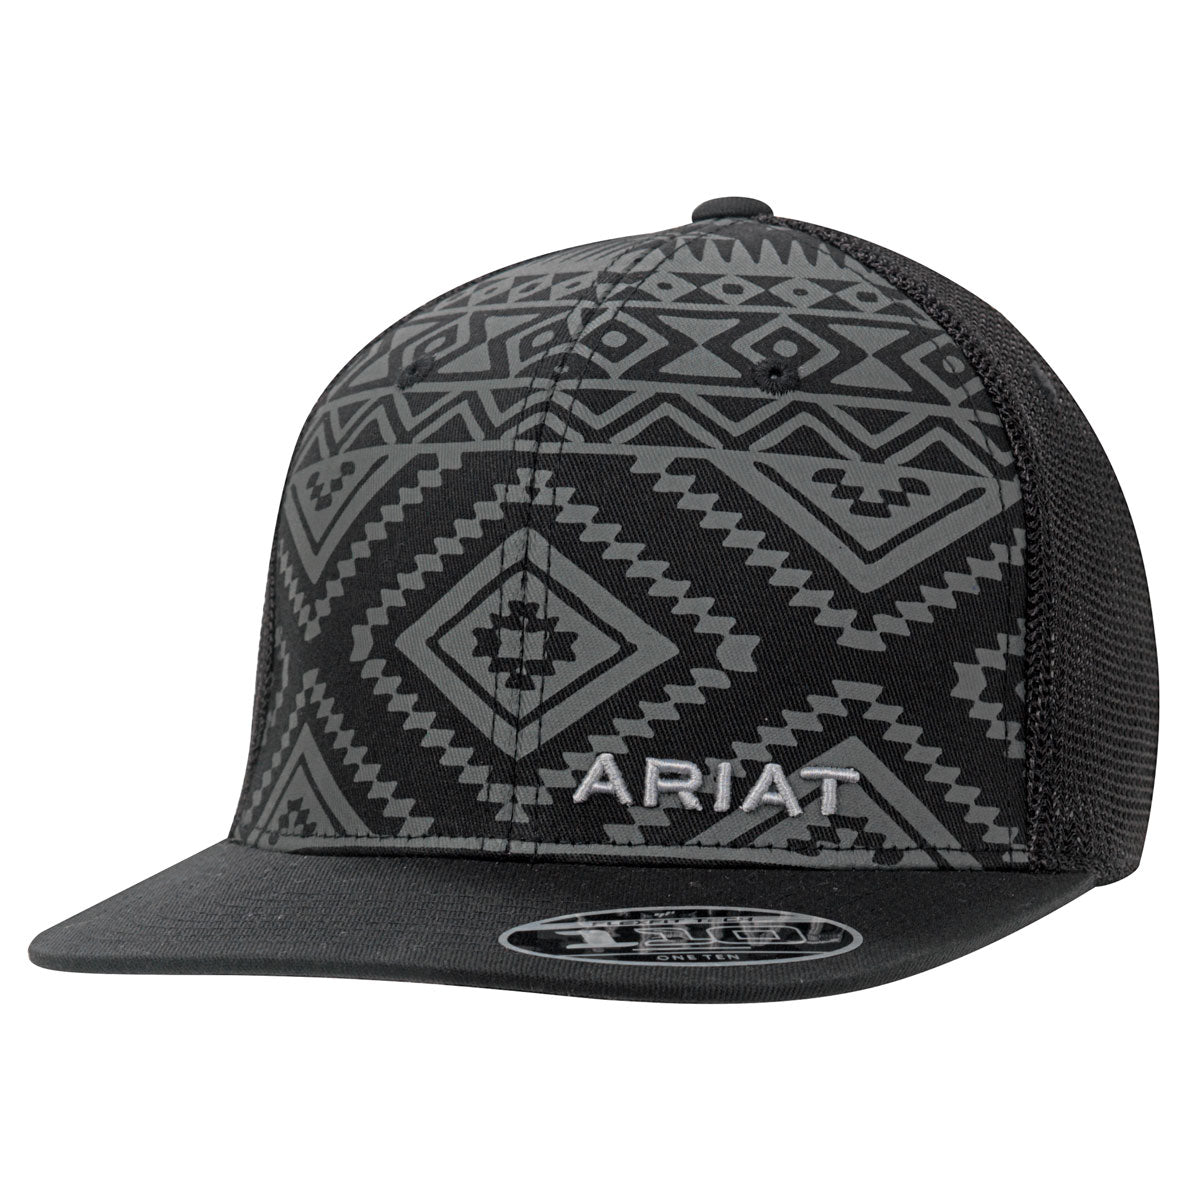 Ariat Men's "Aztec" Ball Cap